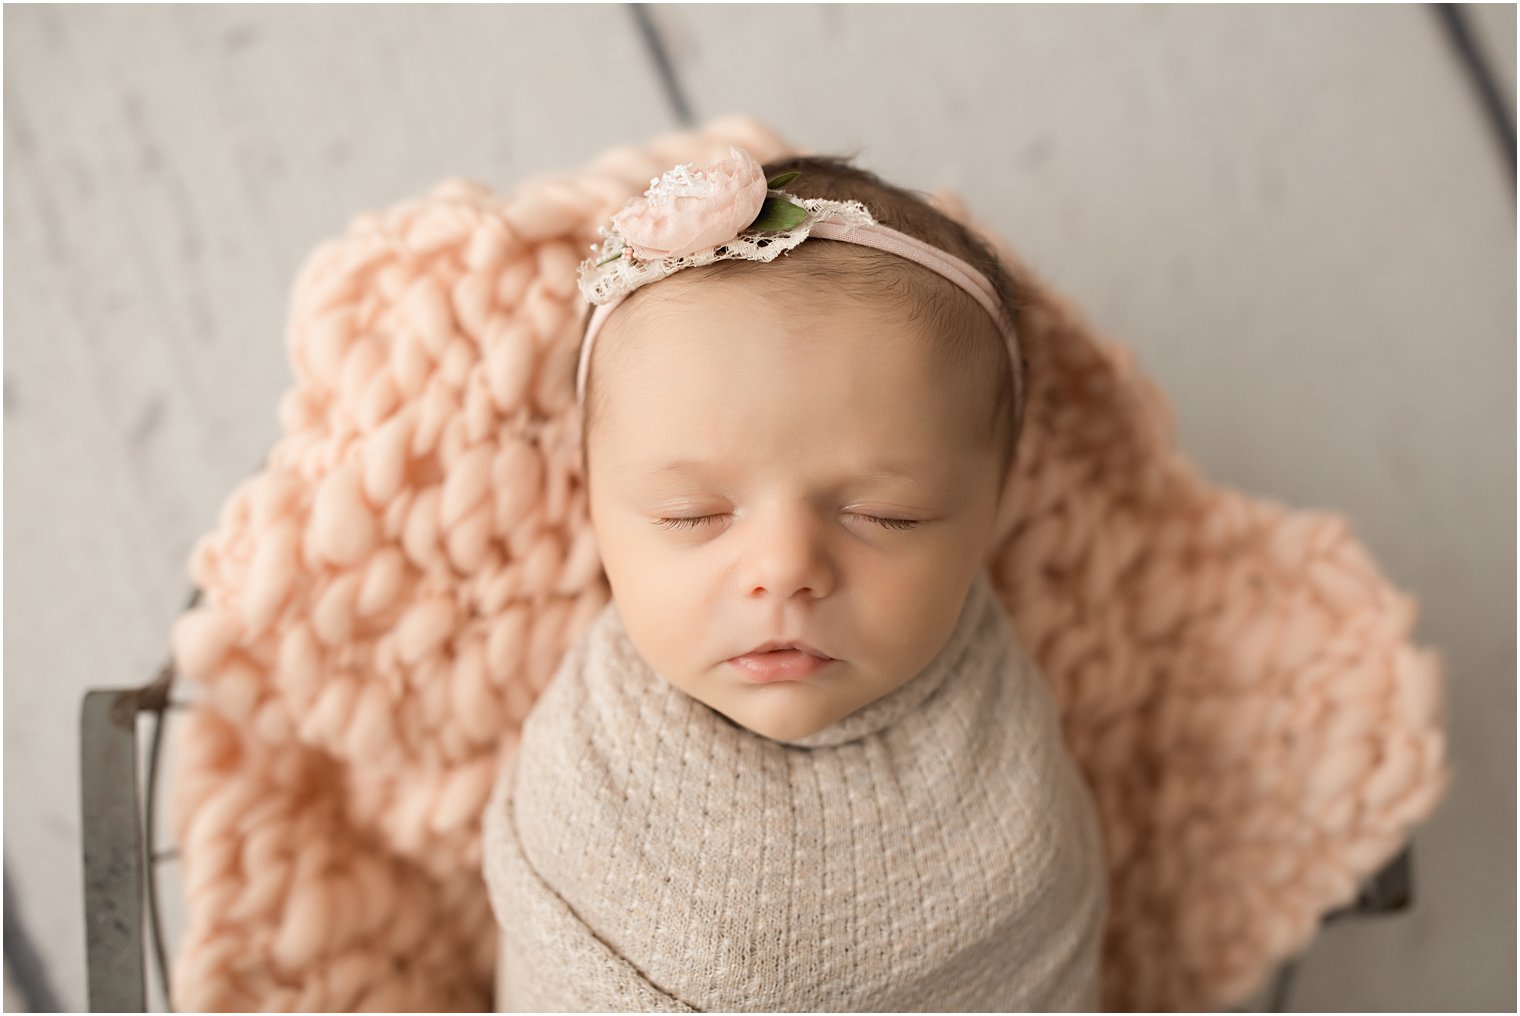 Newborn in a peach blanket | Burlington County Newborn Photographer | Newborn session by Idalia Photography